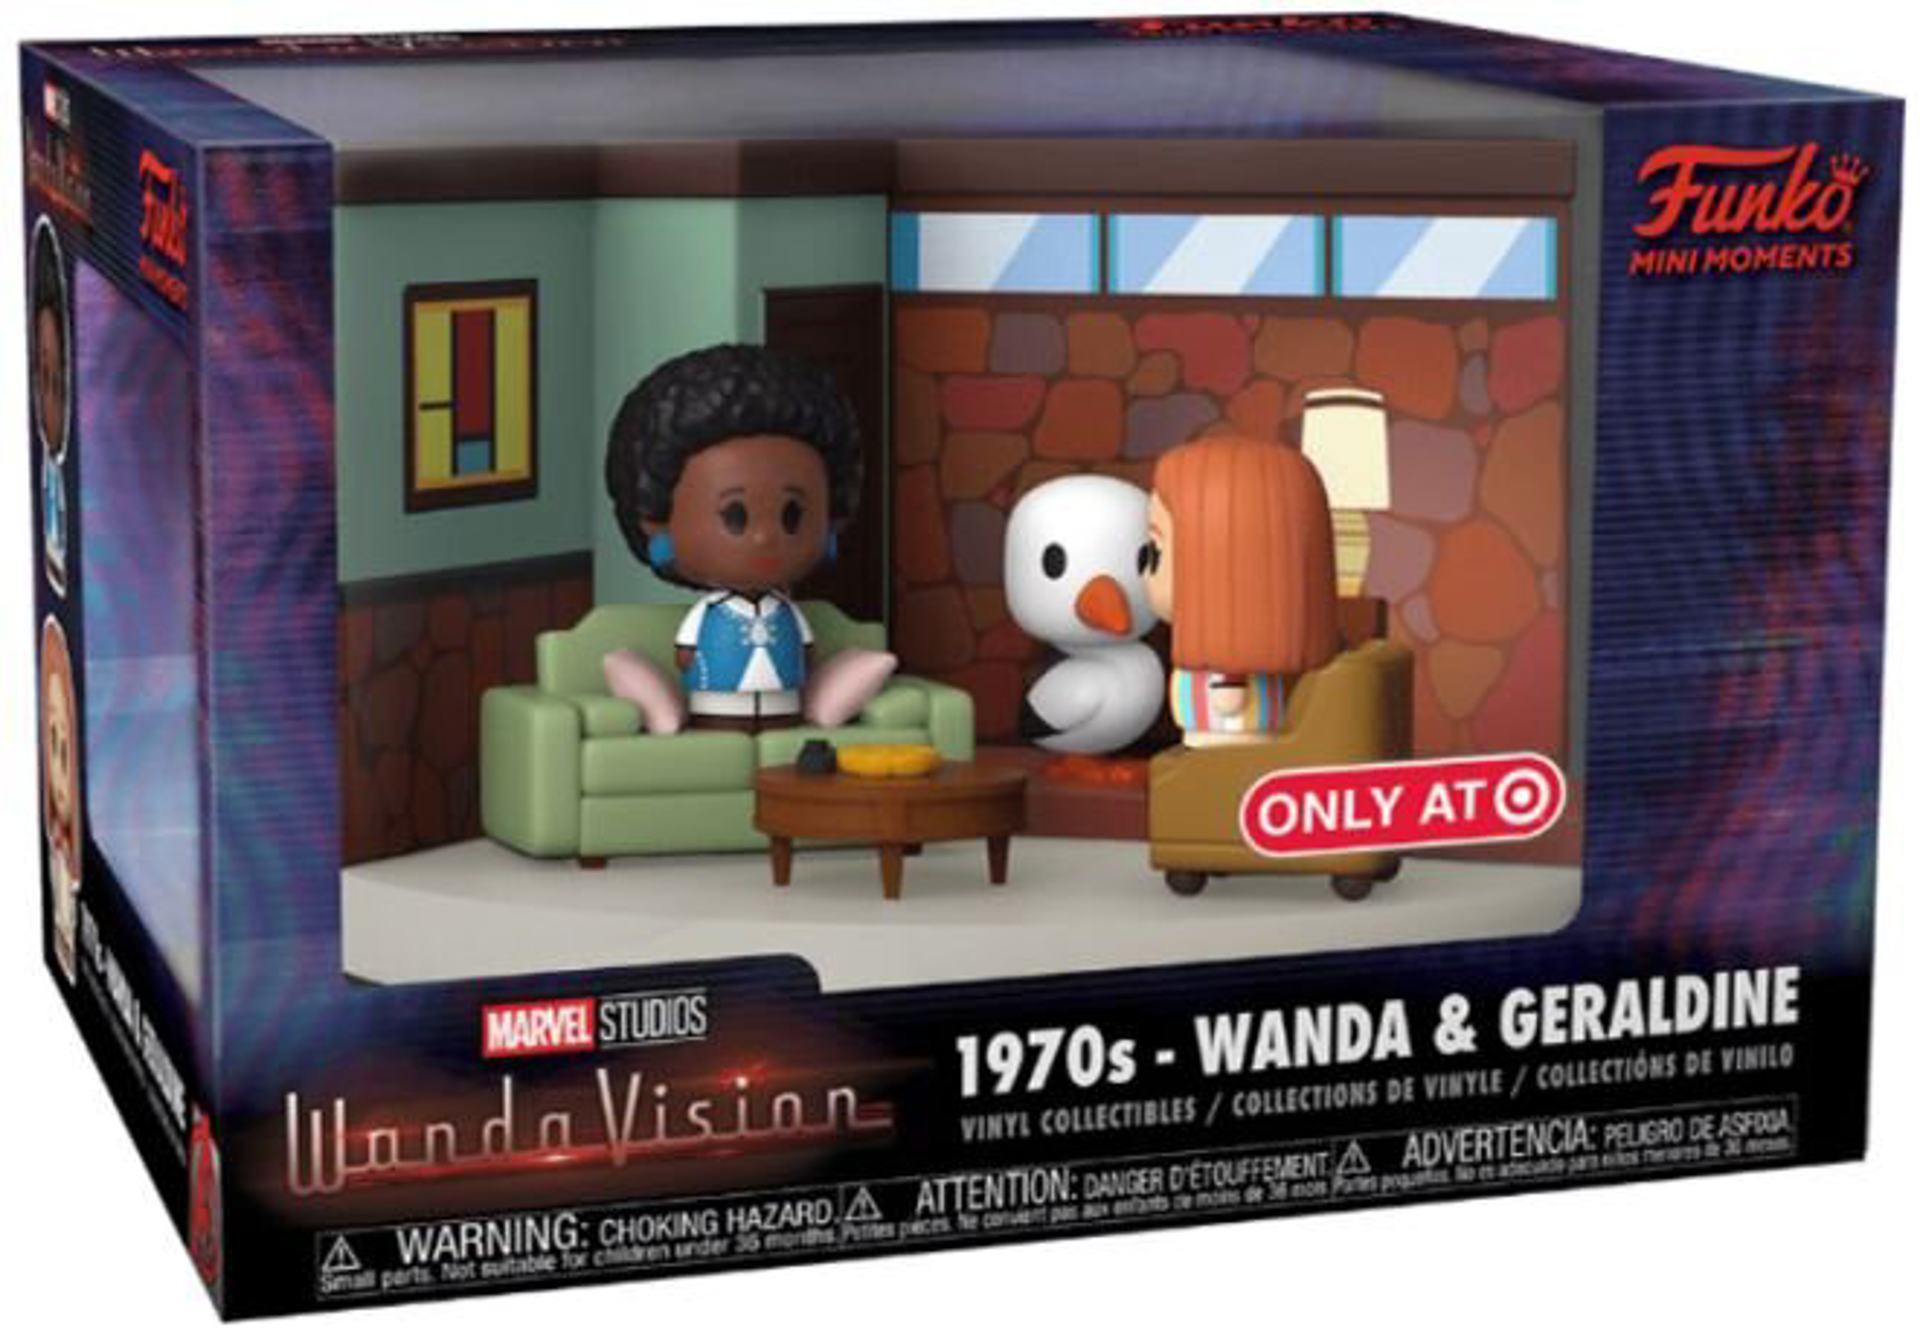 Funko Mini Moments: Marvel Studios WandaVision - 1970s - Wanda & Geraldine (Living Room) (Special Edition)